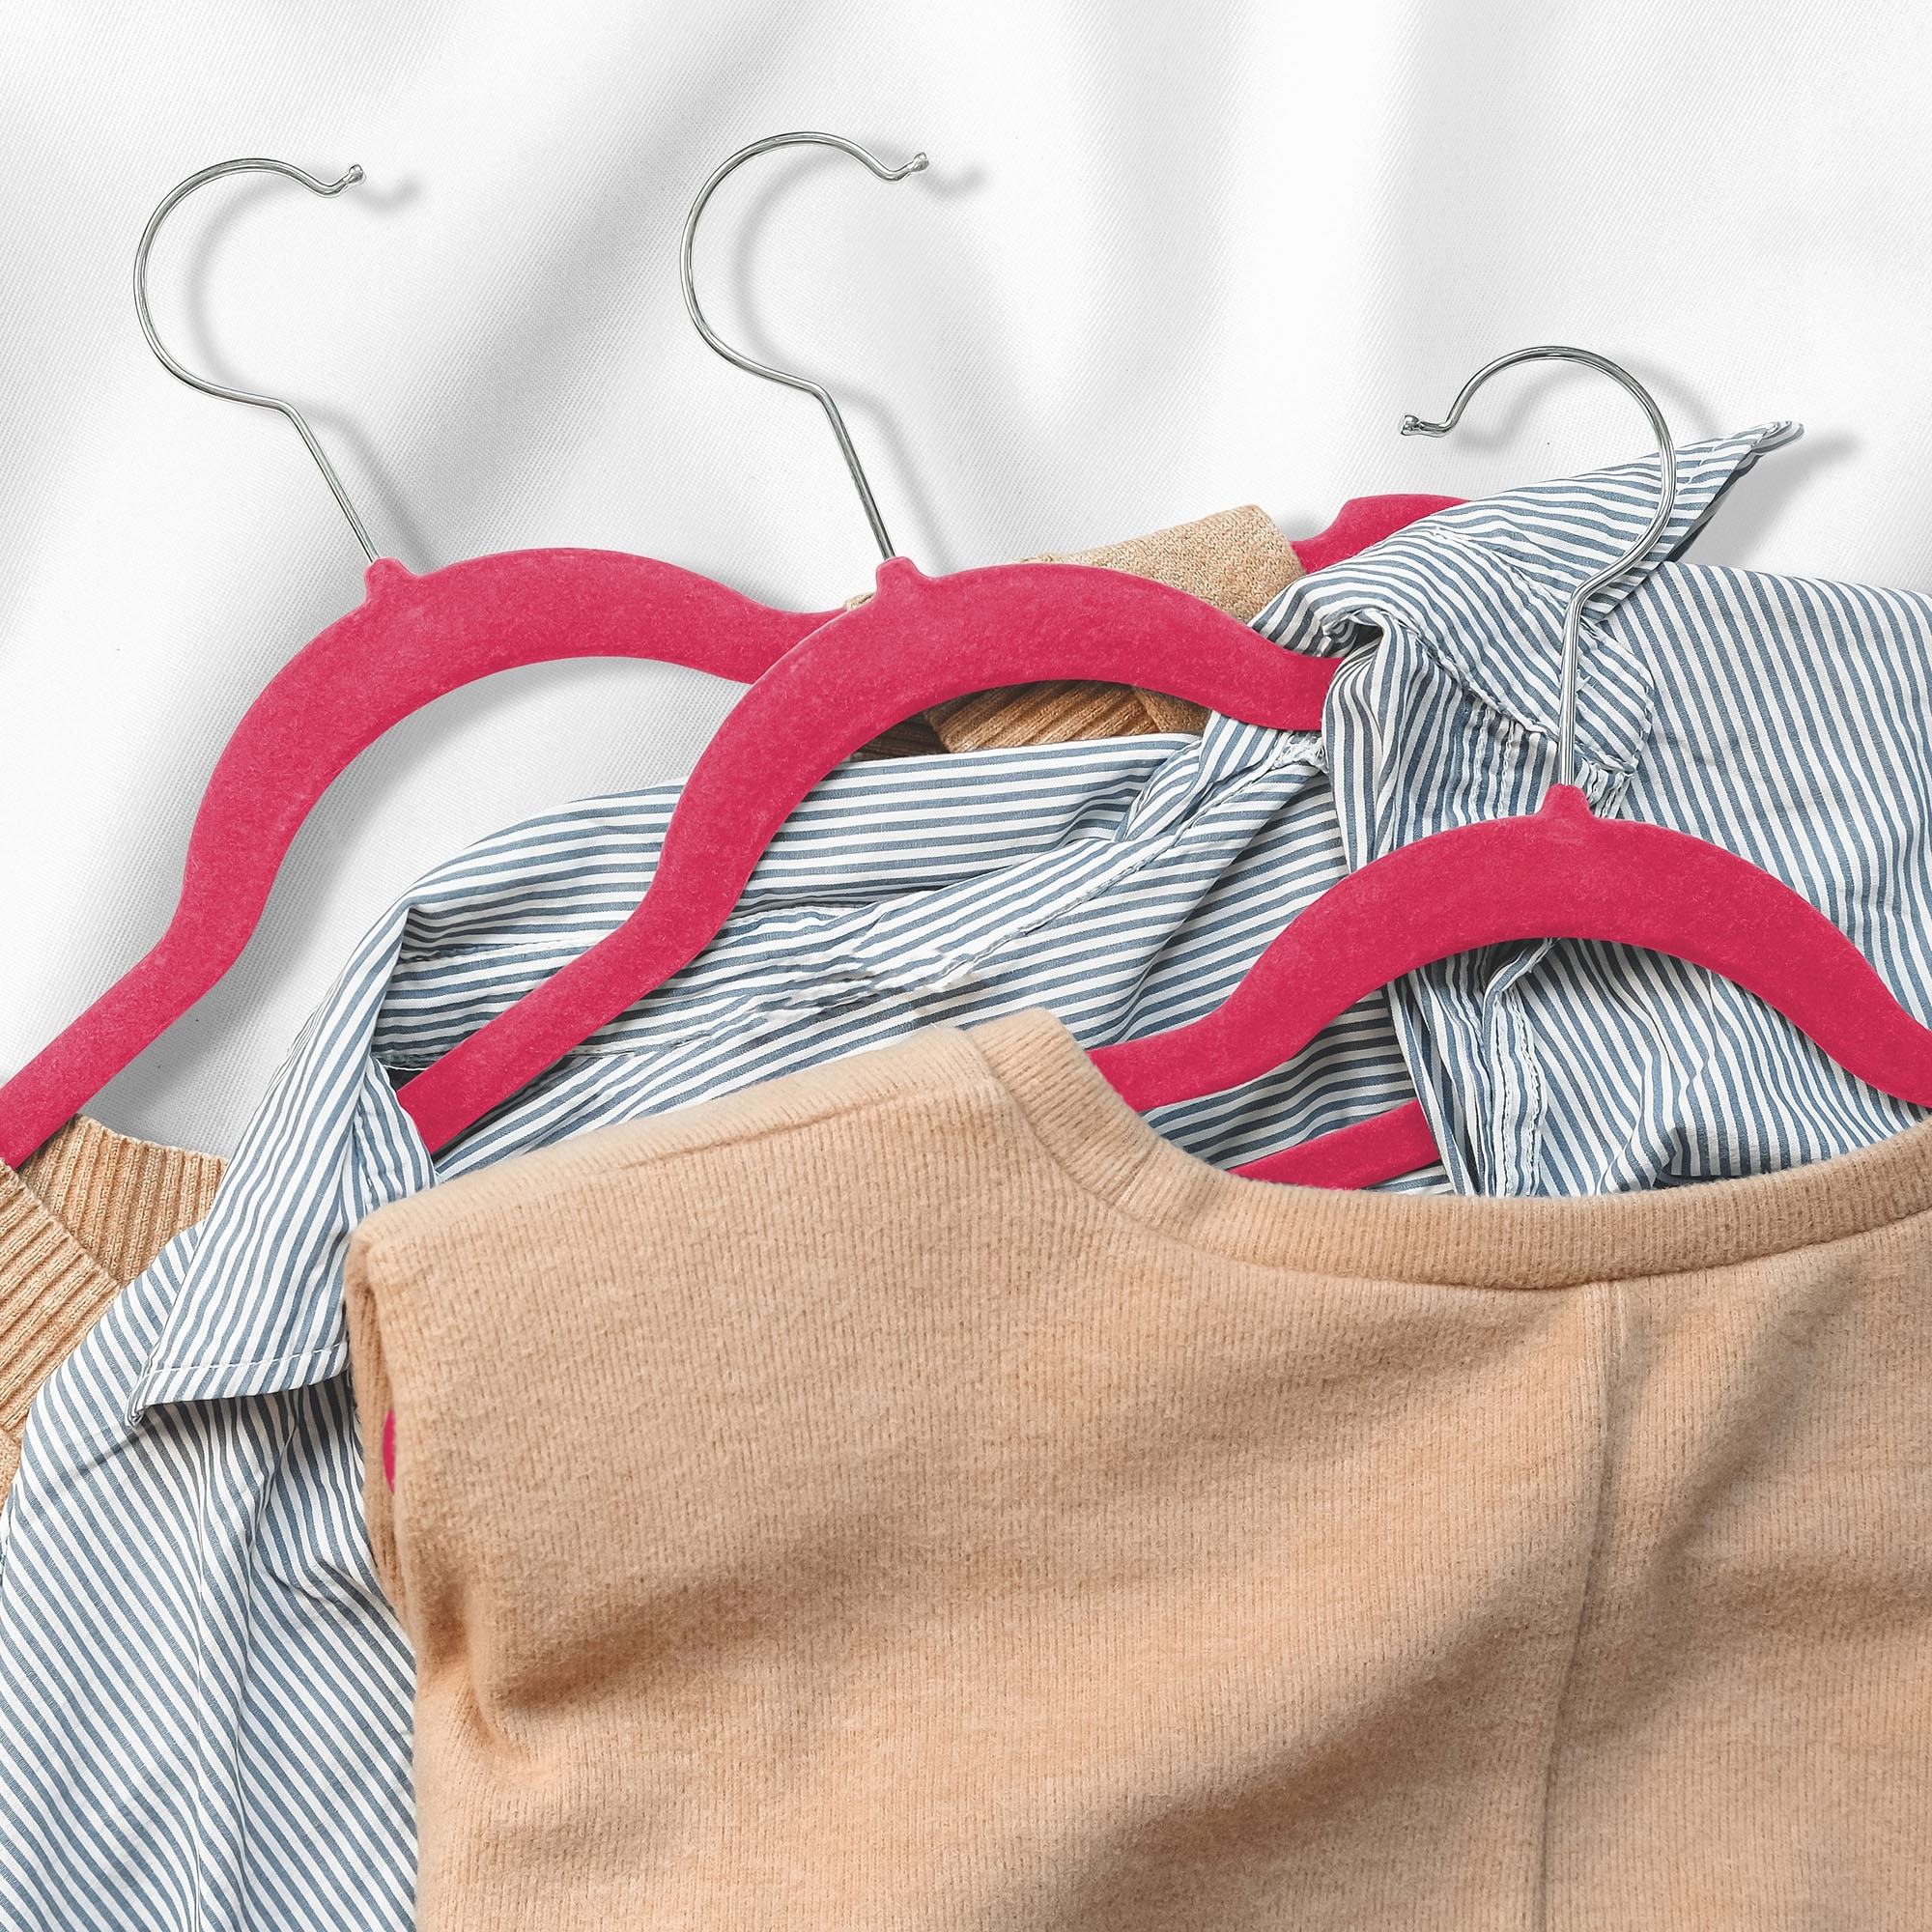 Some 5 benefits of kids' velvet hangers –